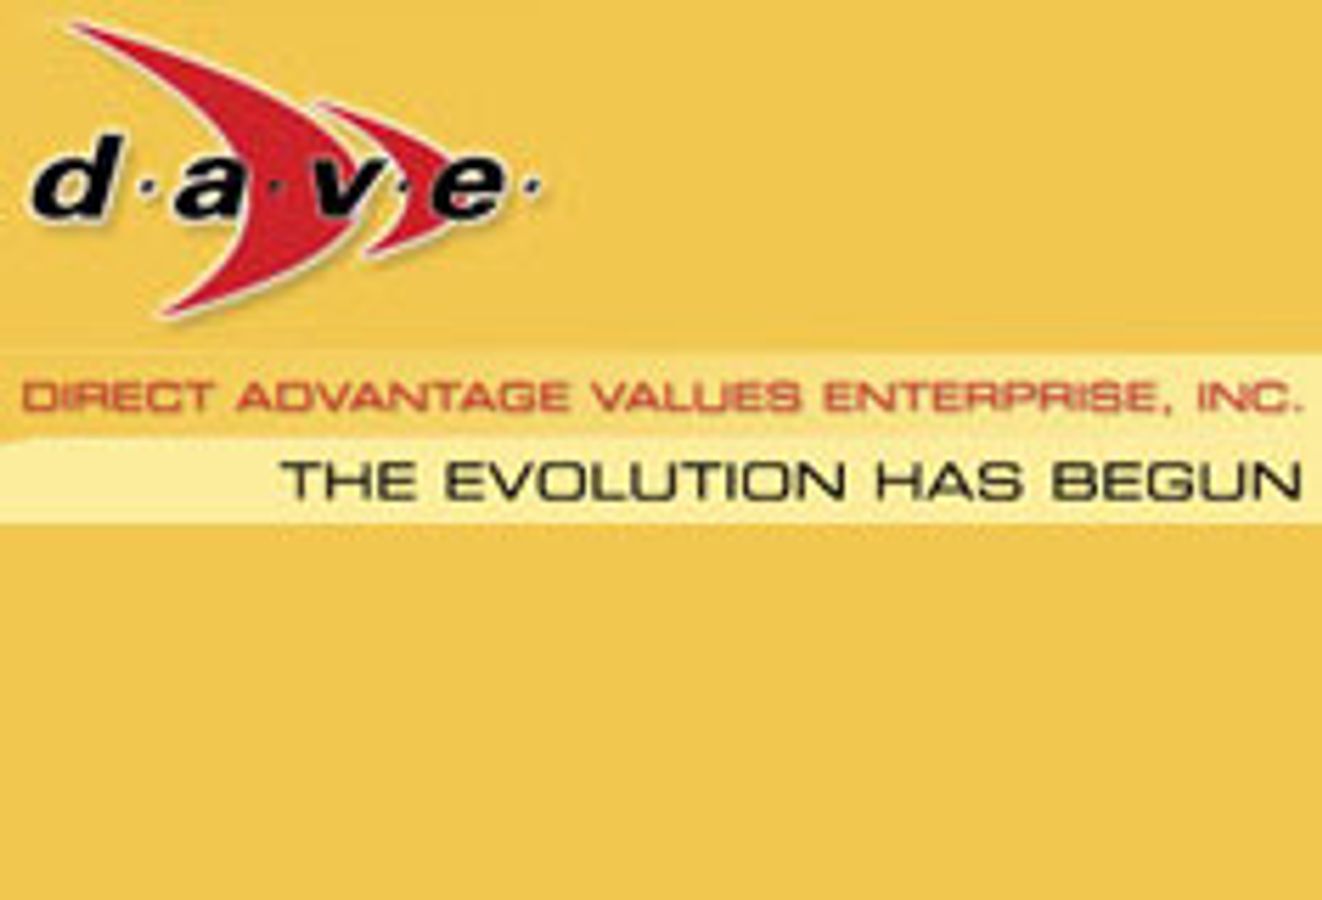 Direct Advantage Values Enterprise Inc. (D.A.V.E.)